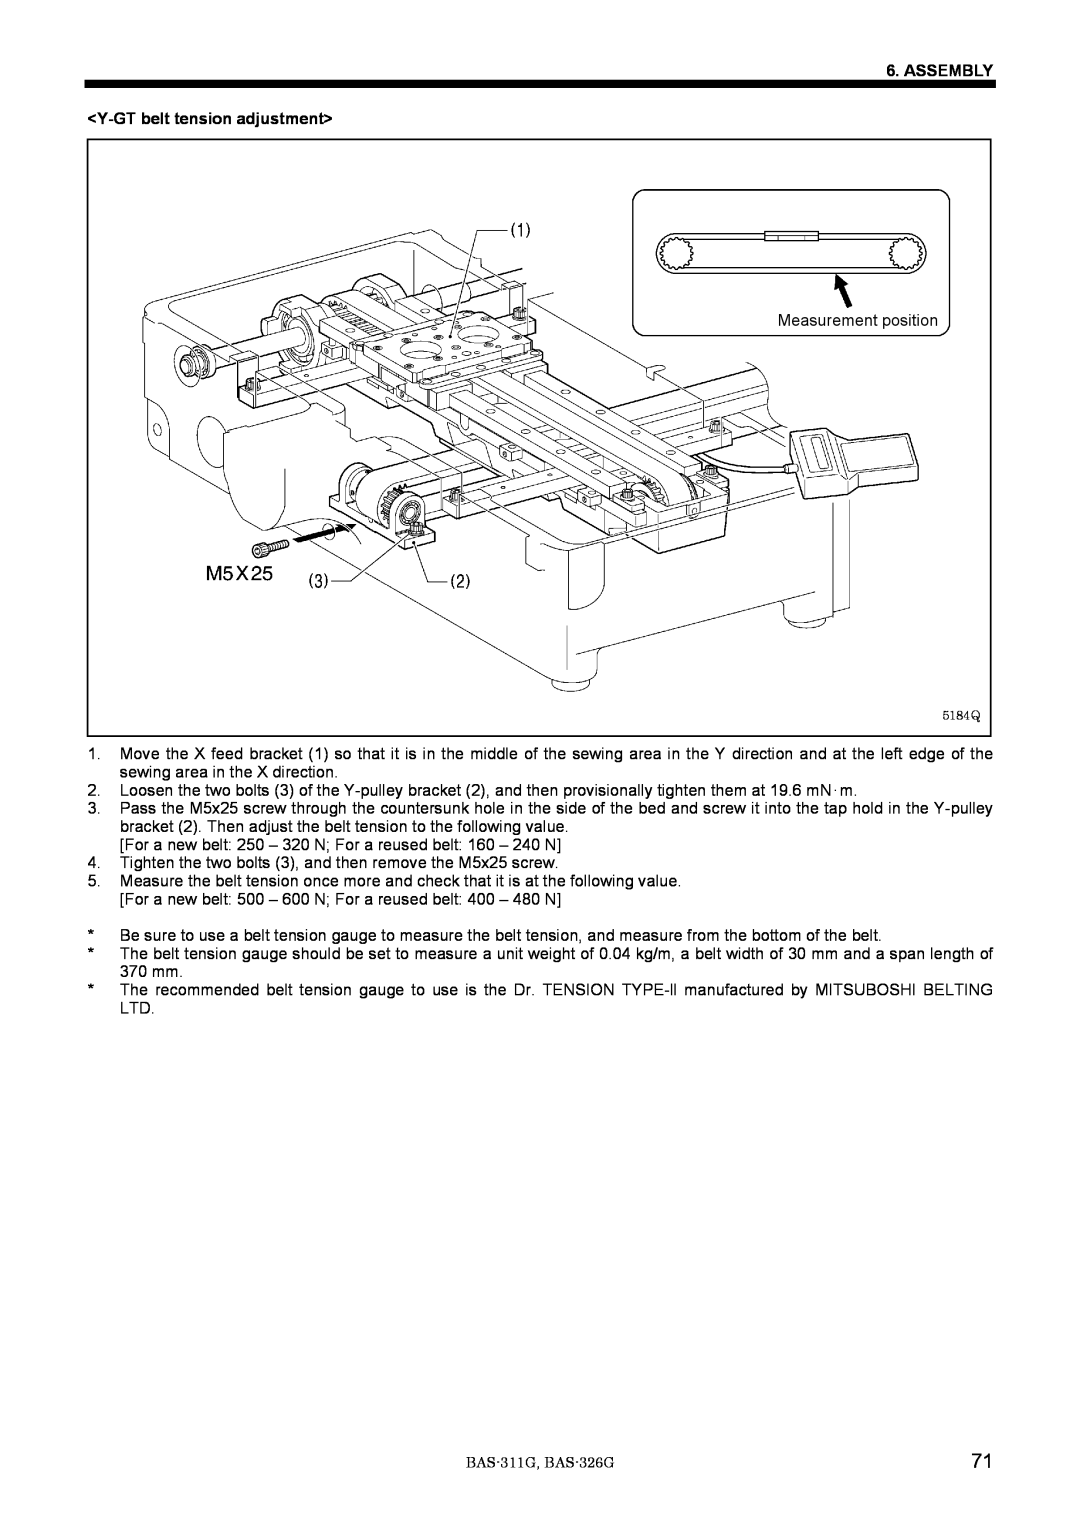 Brother BAS-311G service manual ASSEMBLY Y-GT belt tension adjustment, 5184Q 